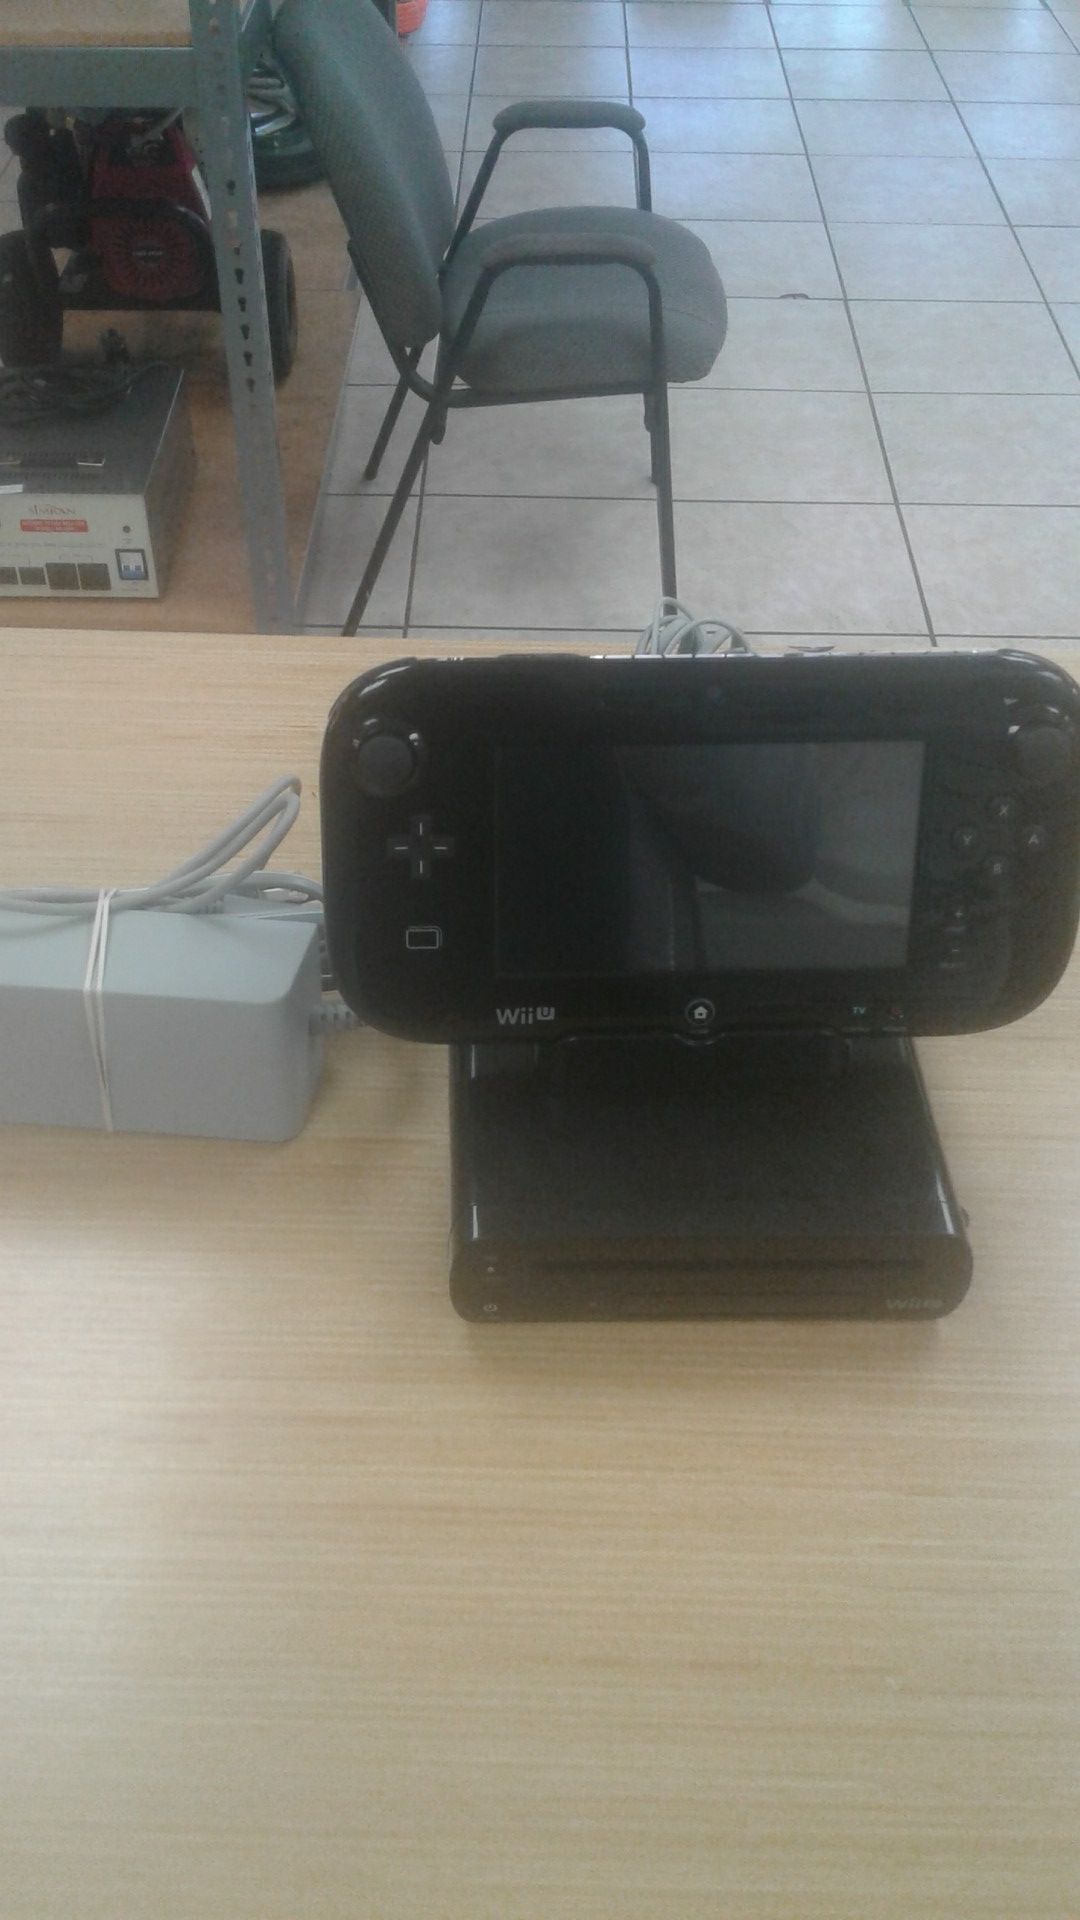 Nintendo Wii U-32 GB Black Handheld System Complete